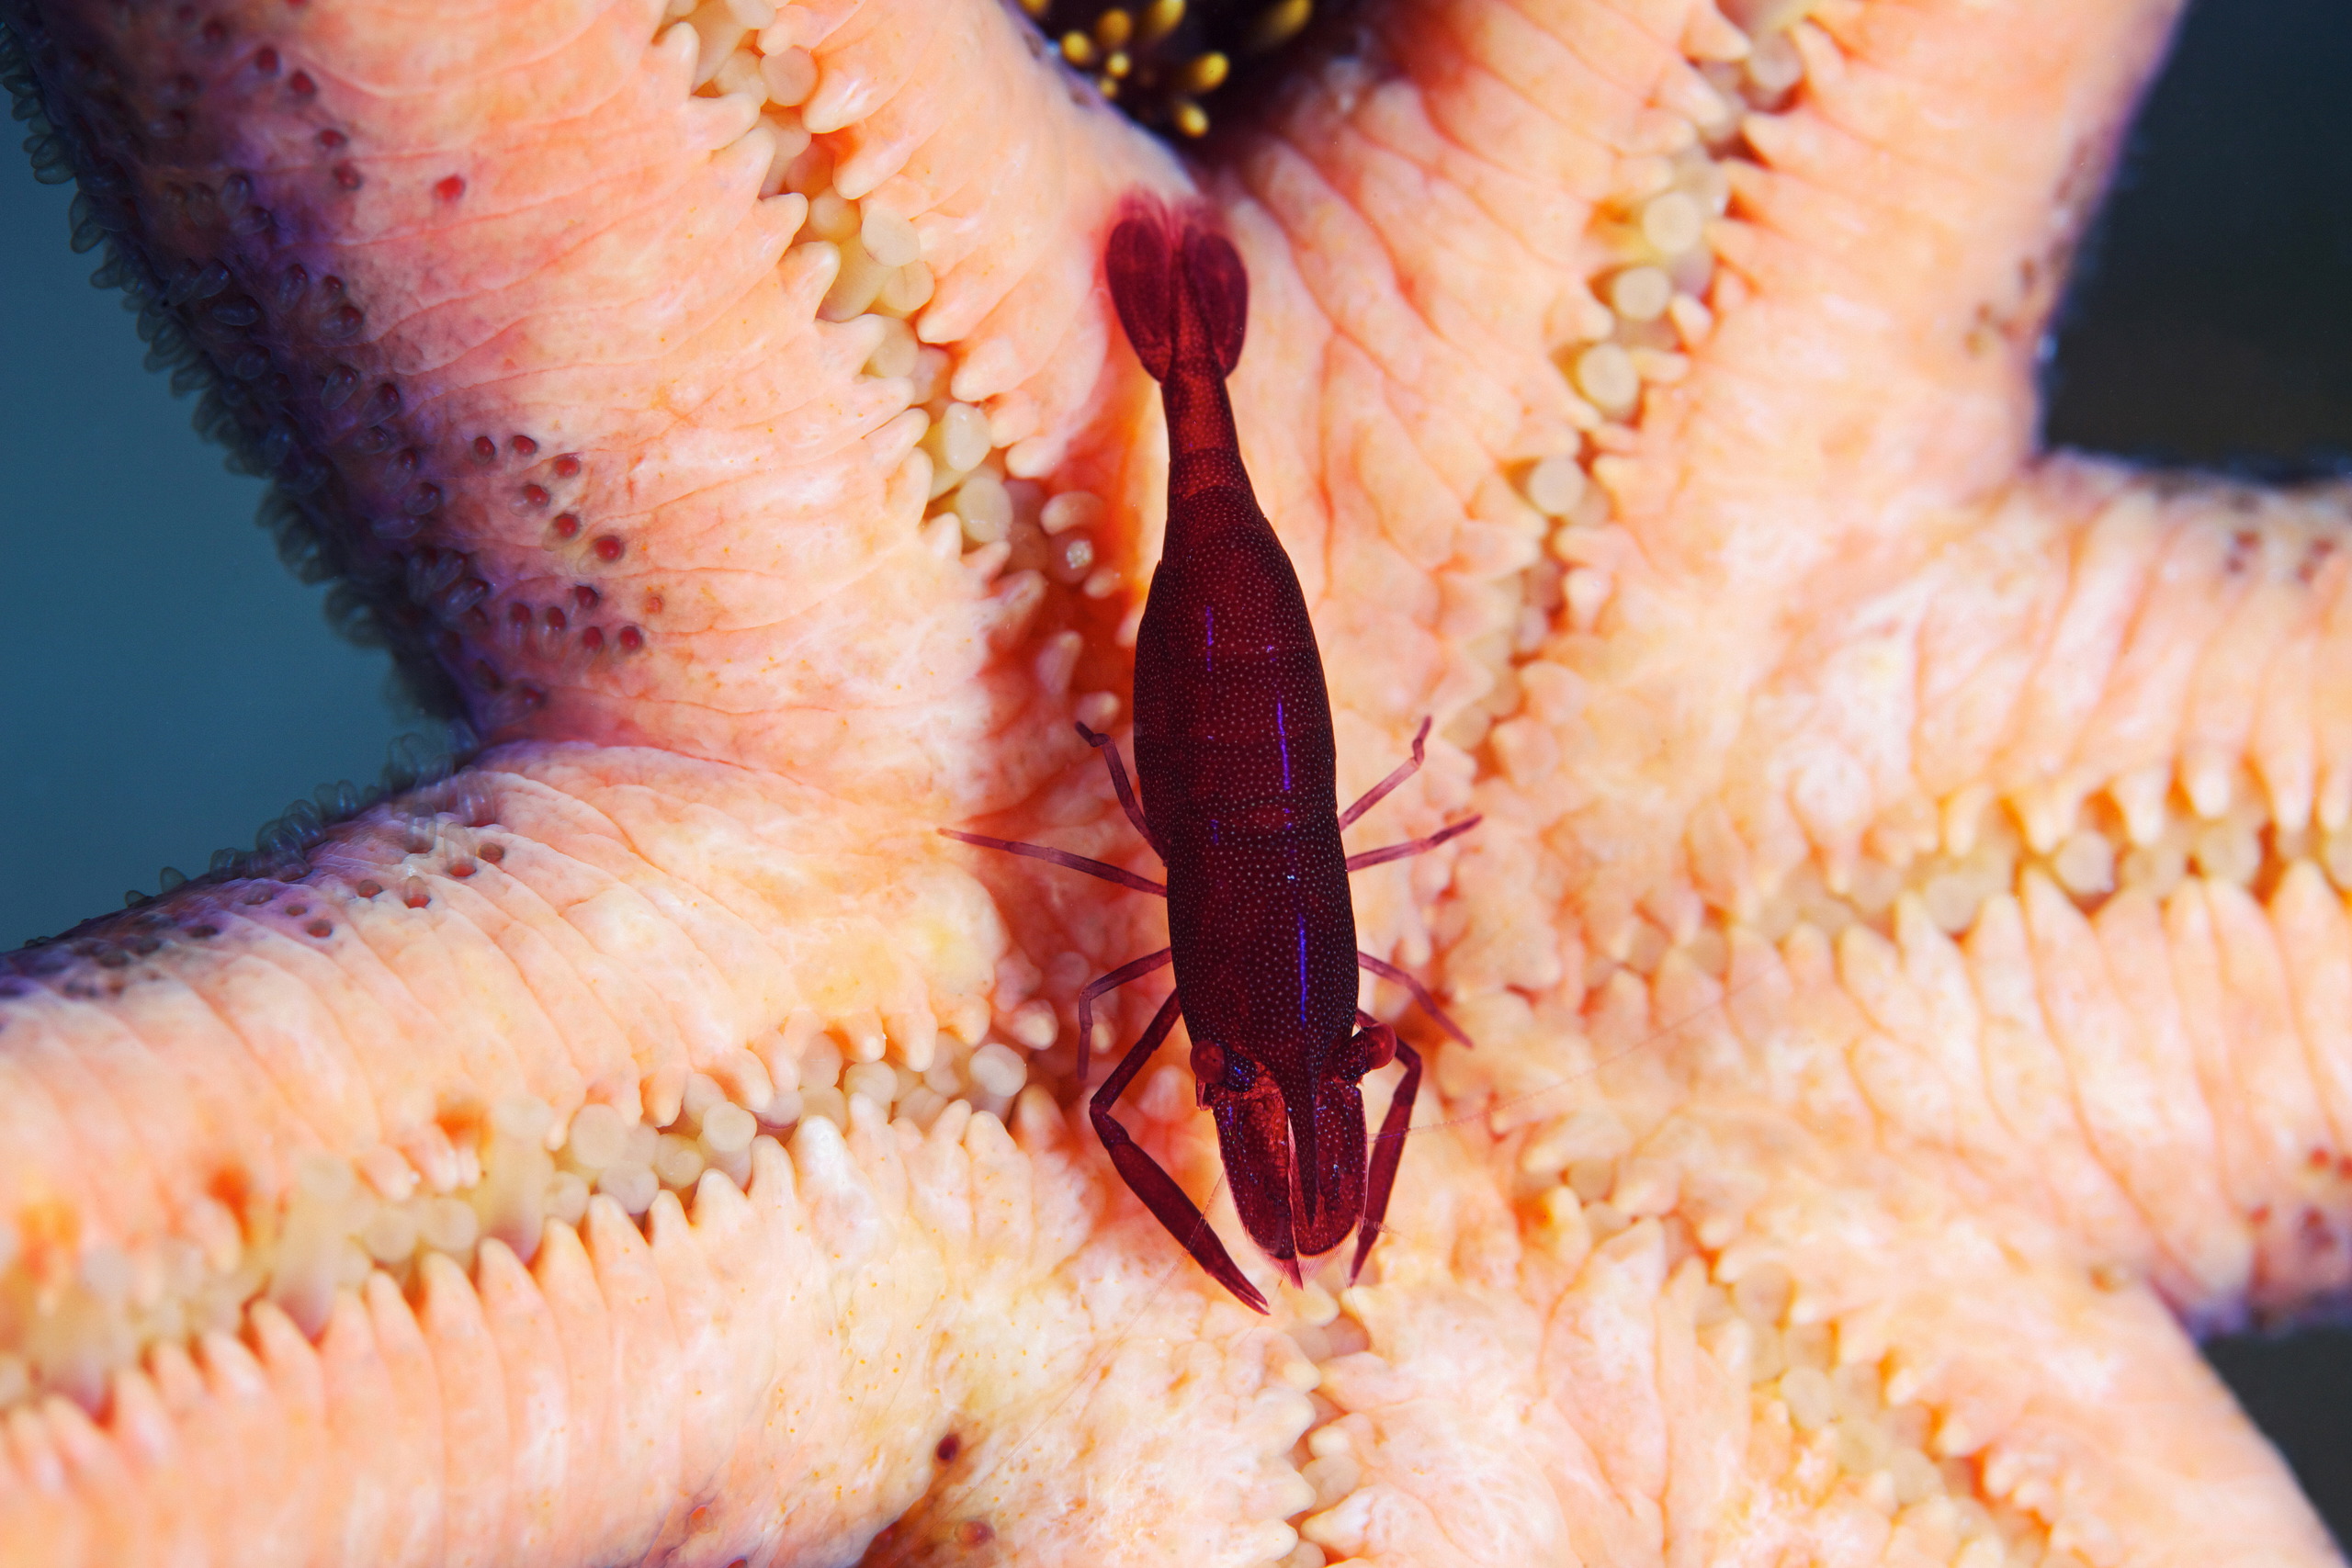 Crustacea – Shrimp on the starfish